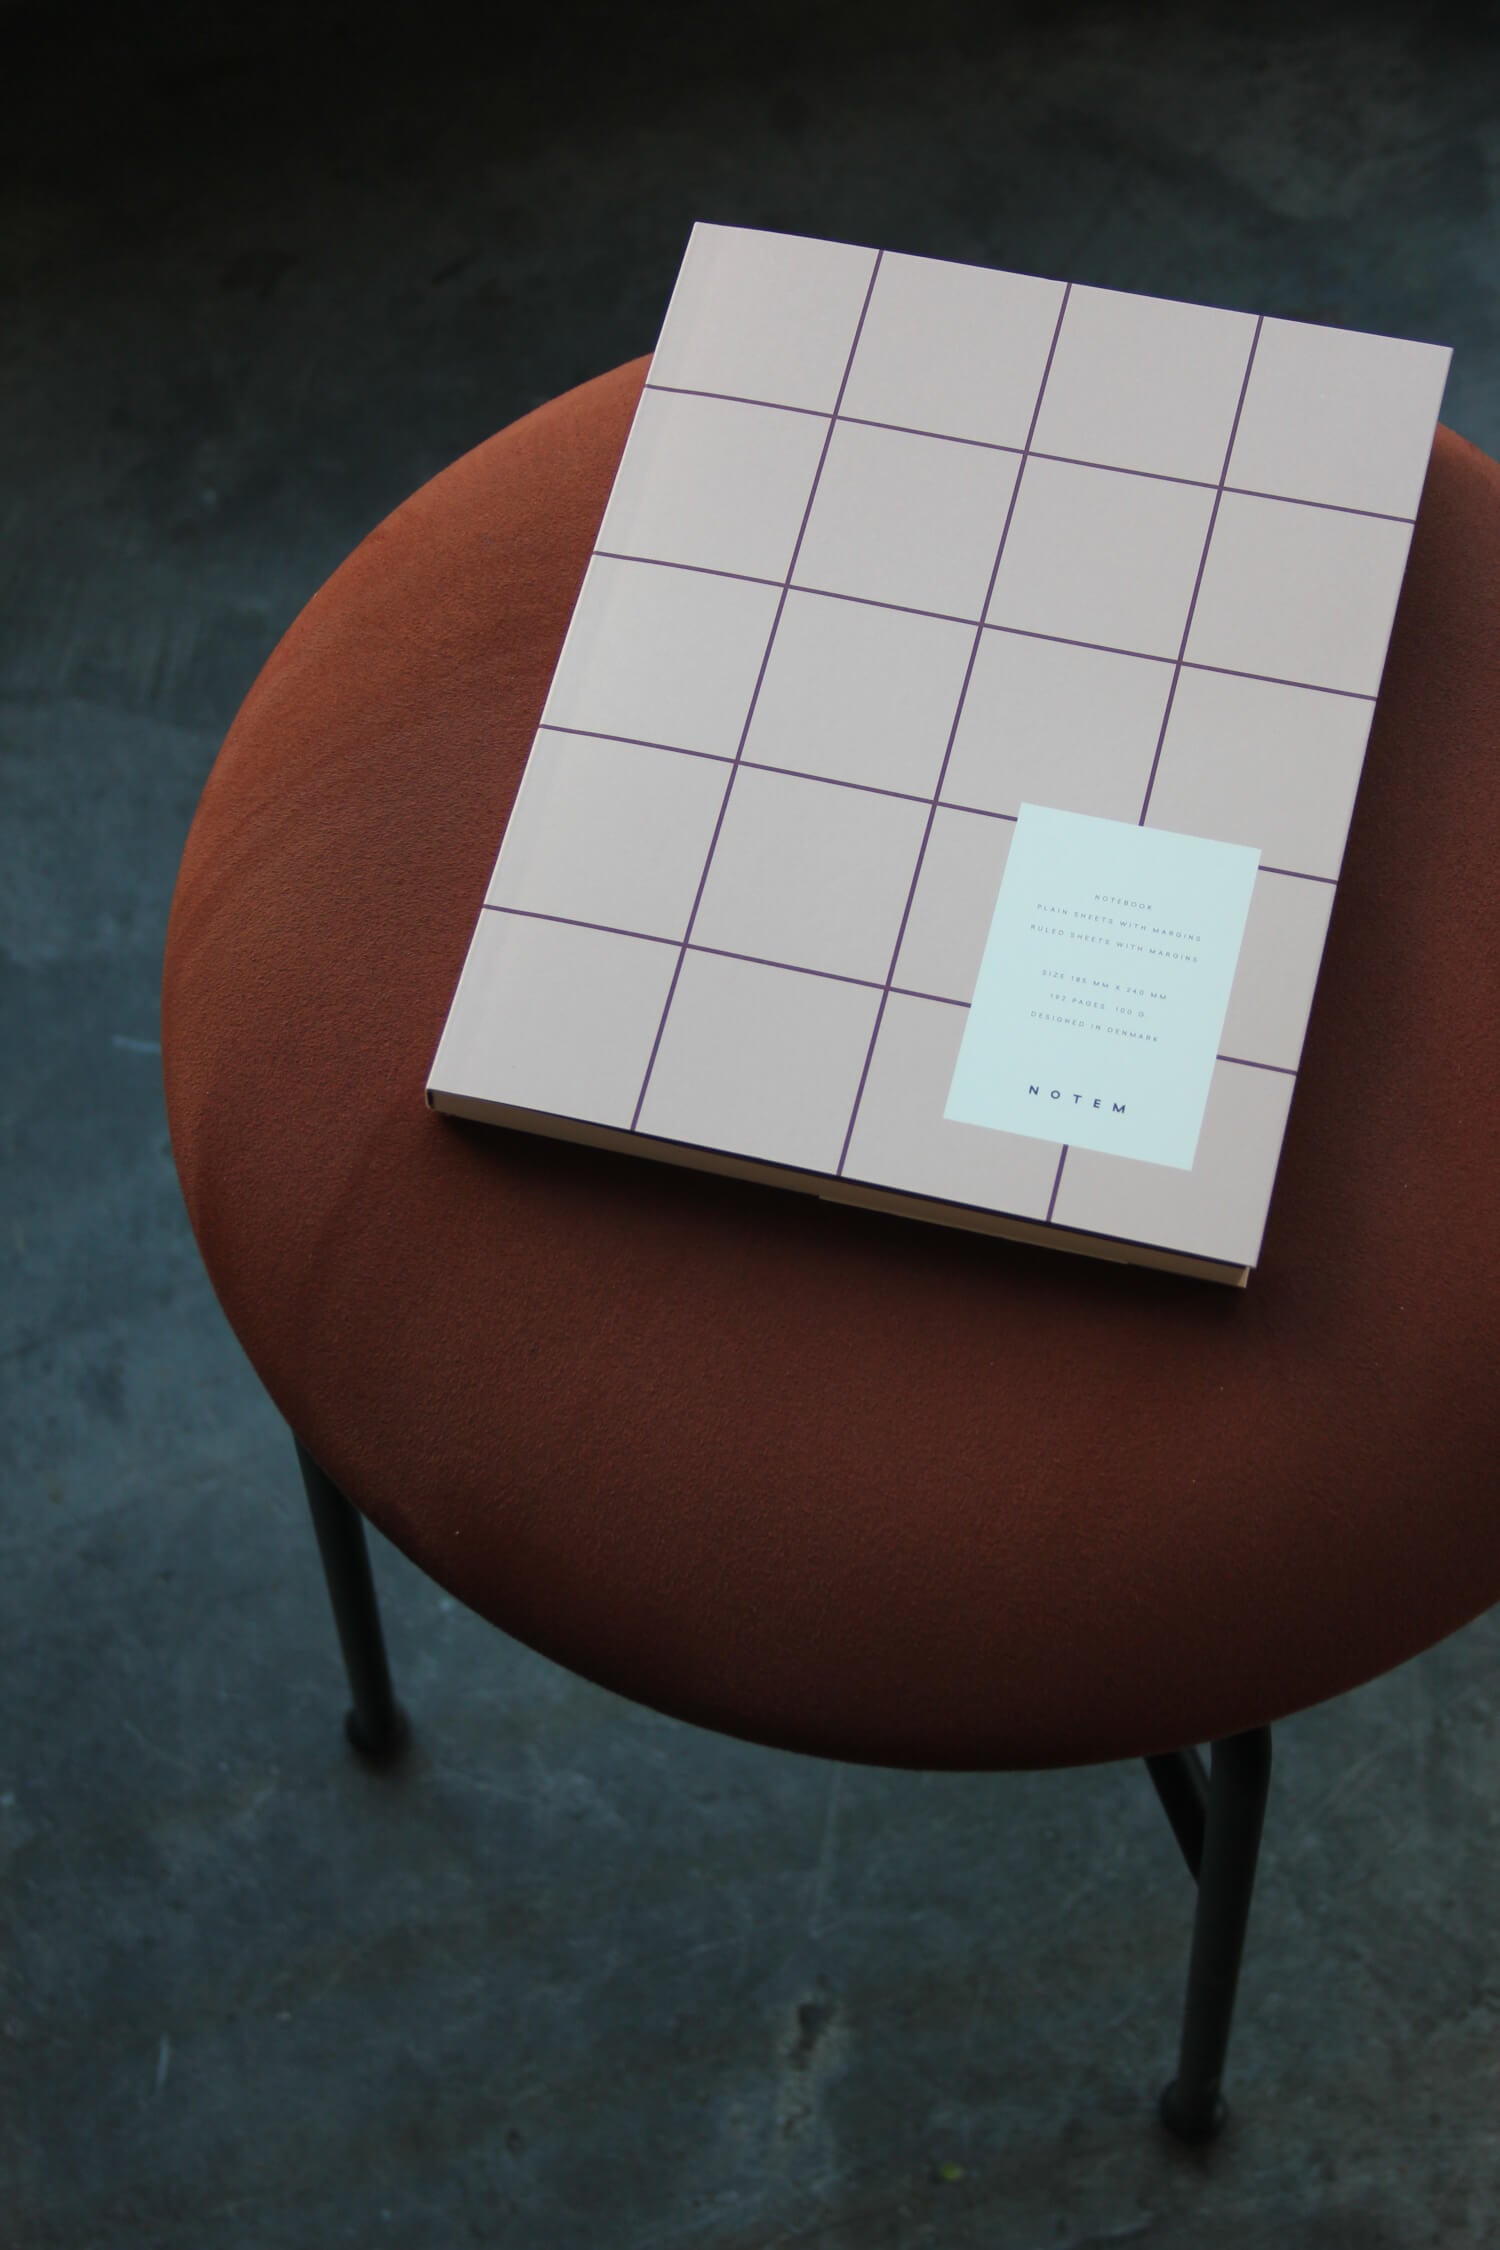 UMA | Large Notebook | Rose Pink | Blank & Ruled | by Notem Studio - Lifestory - Notem Studio